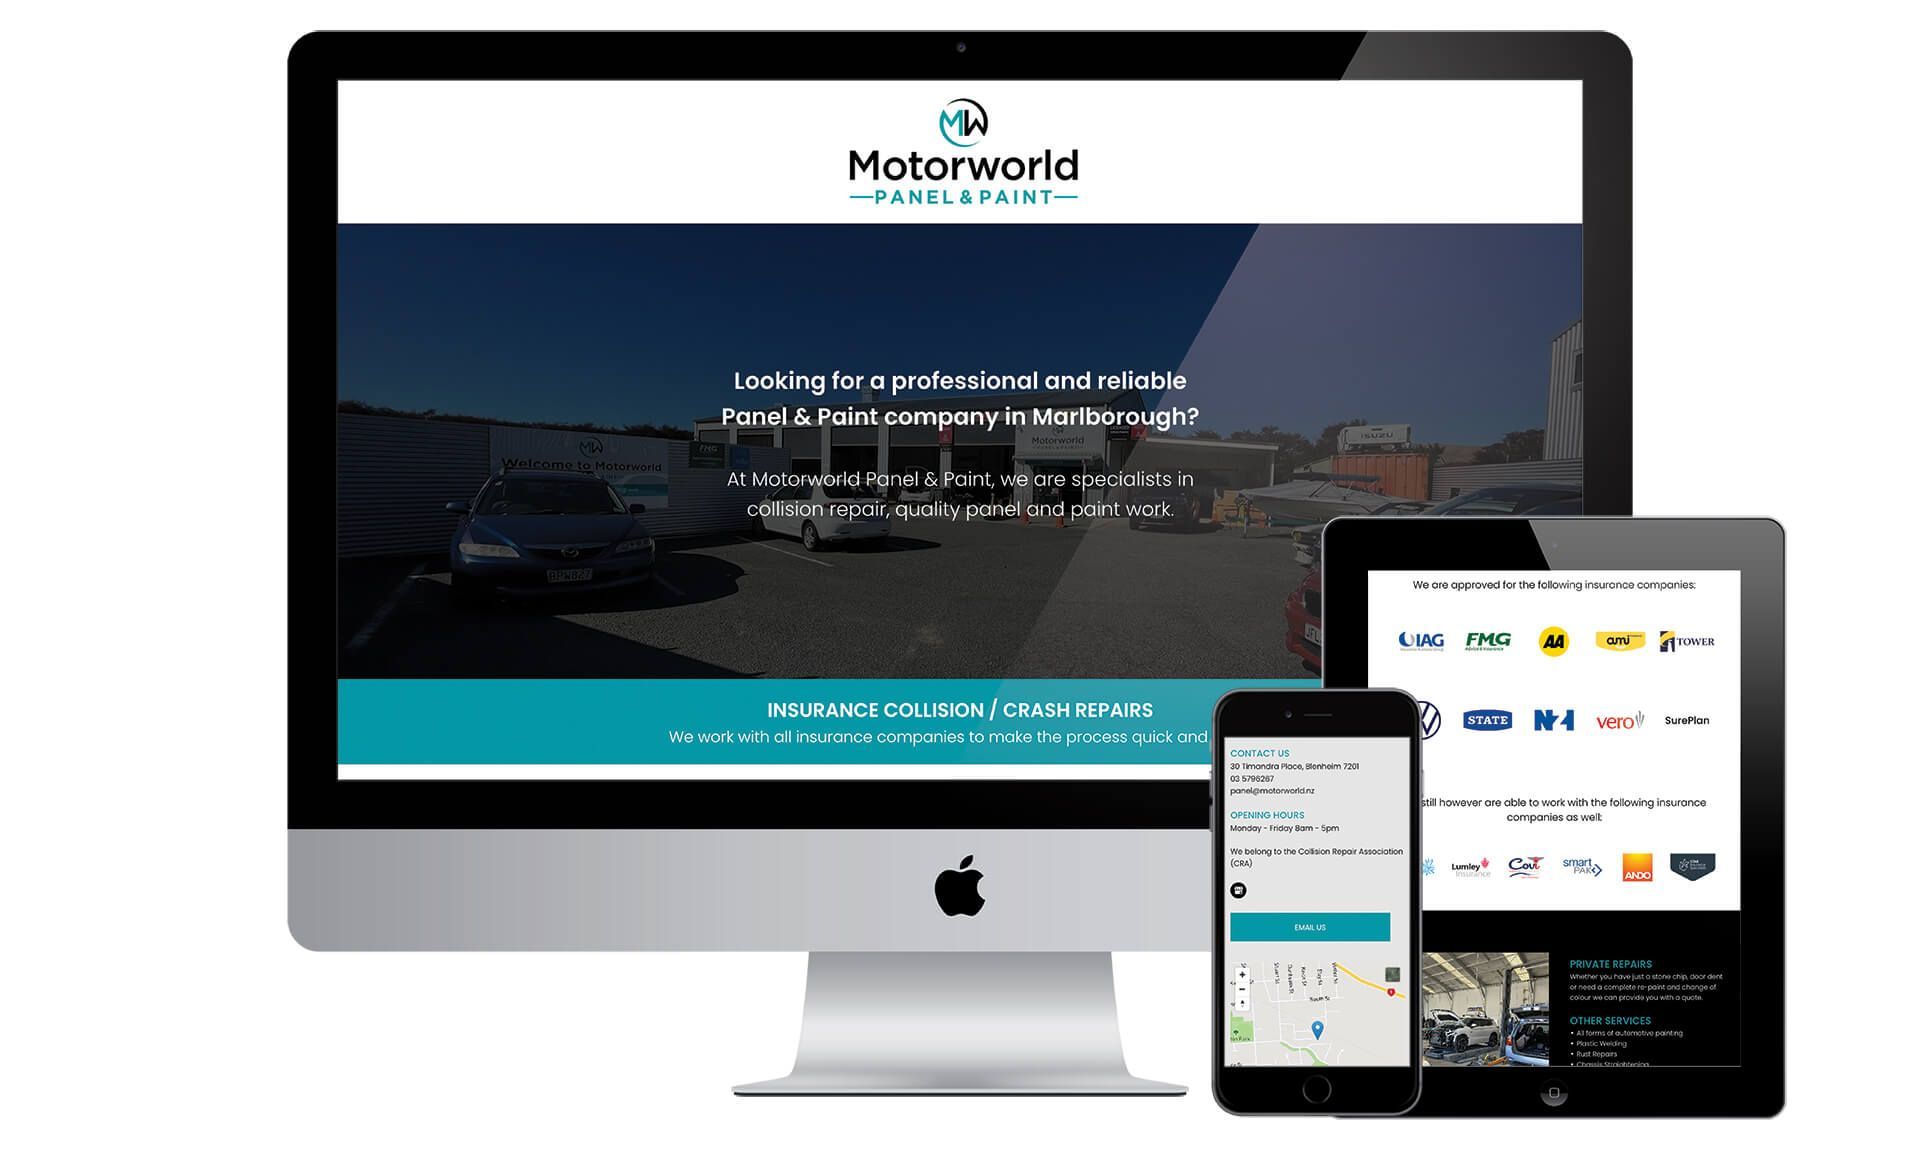 Motorworld Panel & Paint website designed by Vanilla Hayes creative graphic design  studio in Blenheim, Marlborough, New Zealand